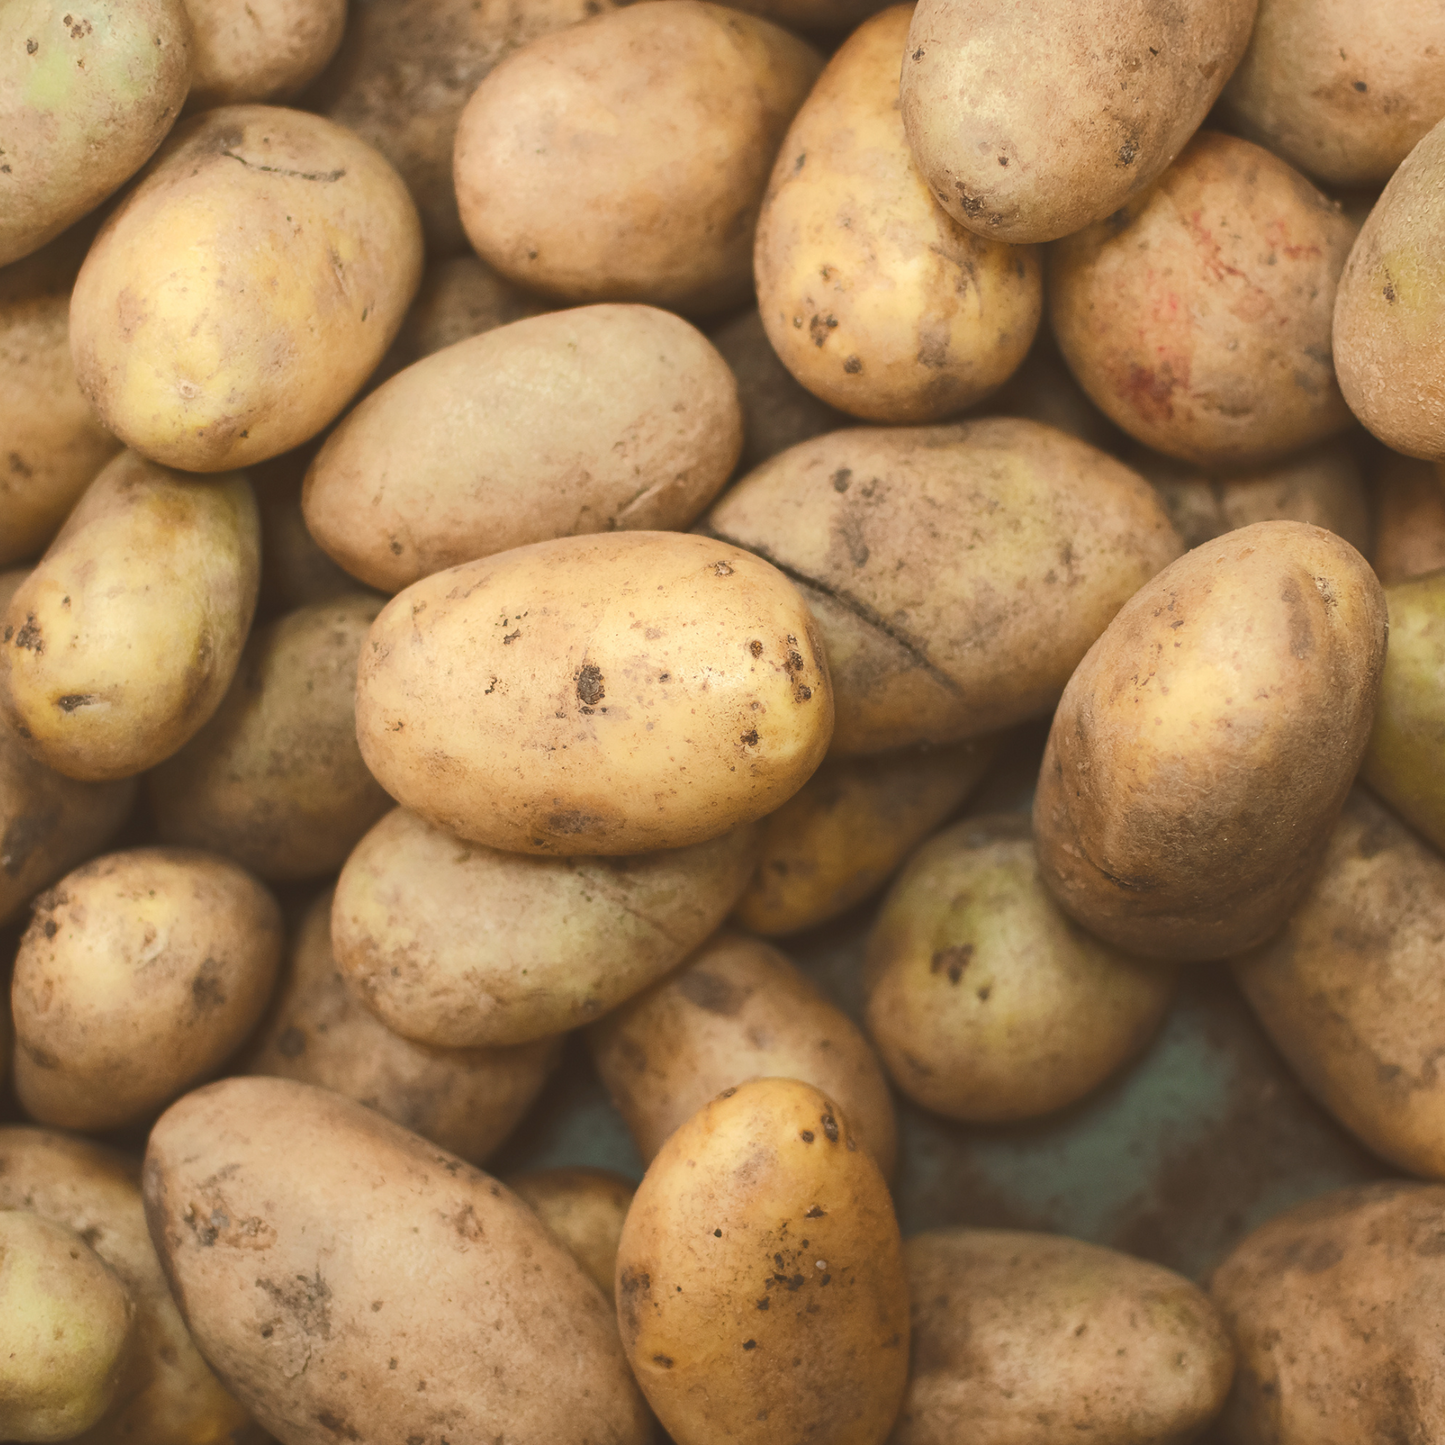 Superior Seed Potatoes